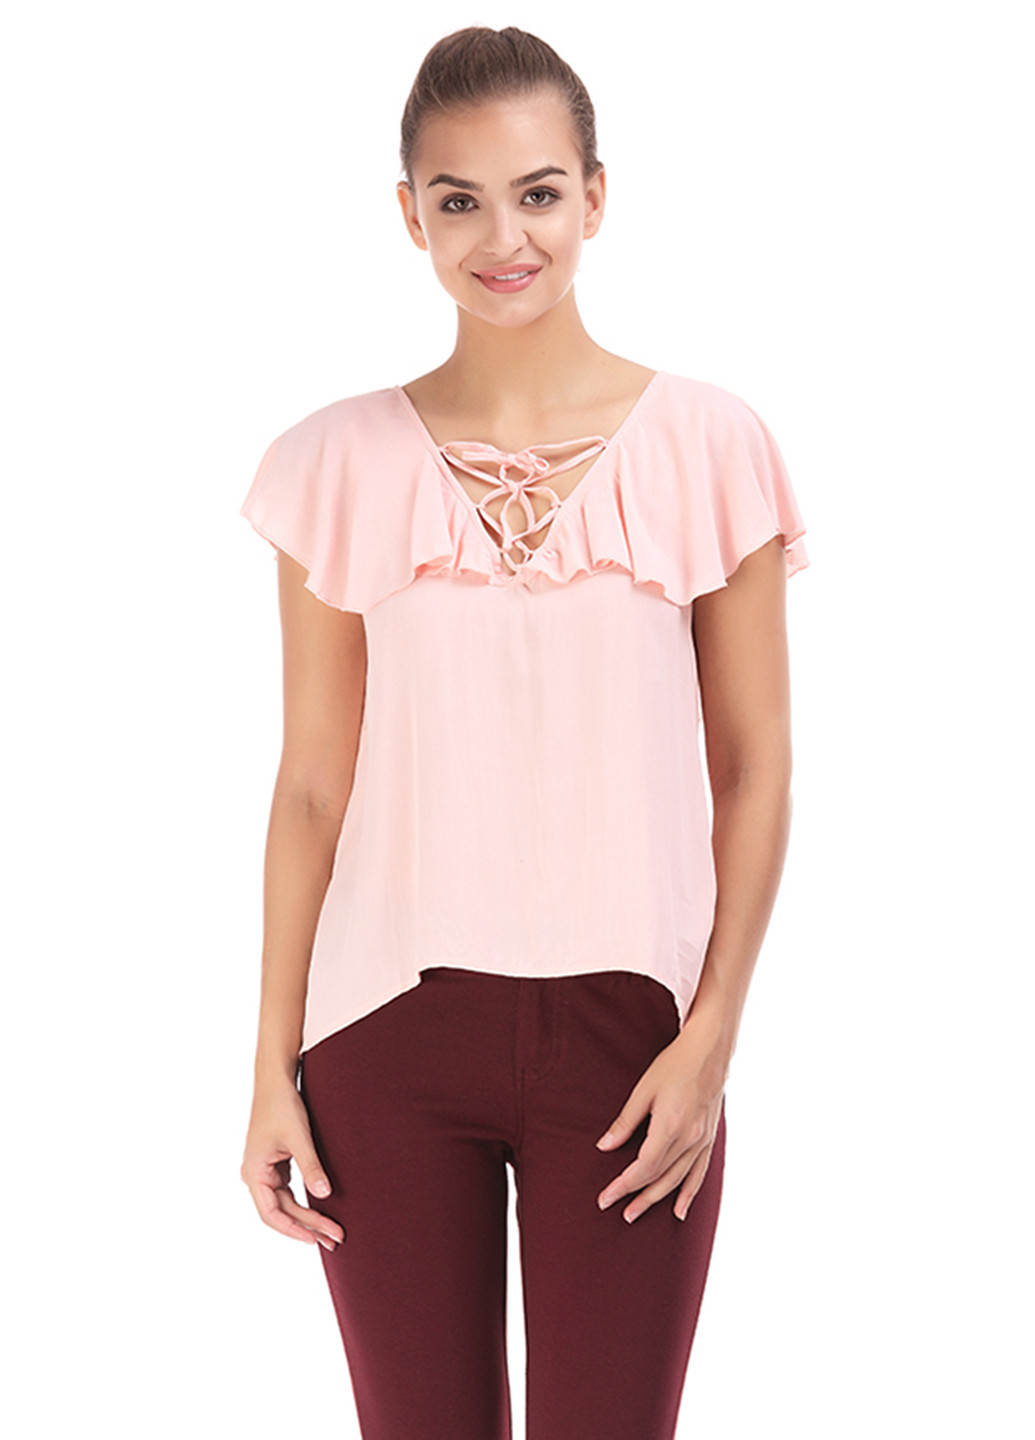 Бледно-розовая летняя блуза Яavin